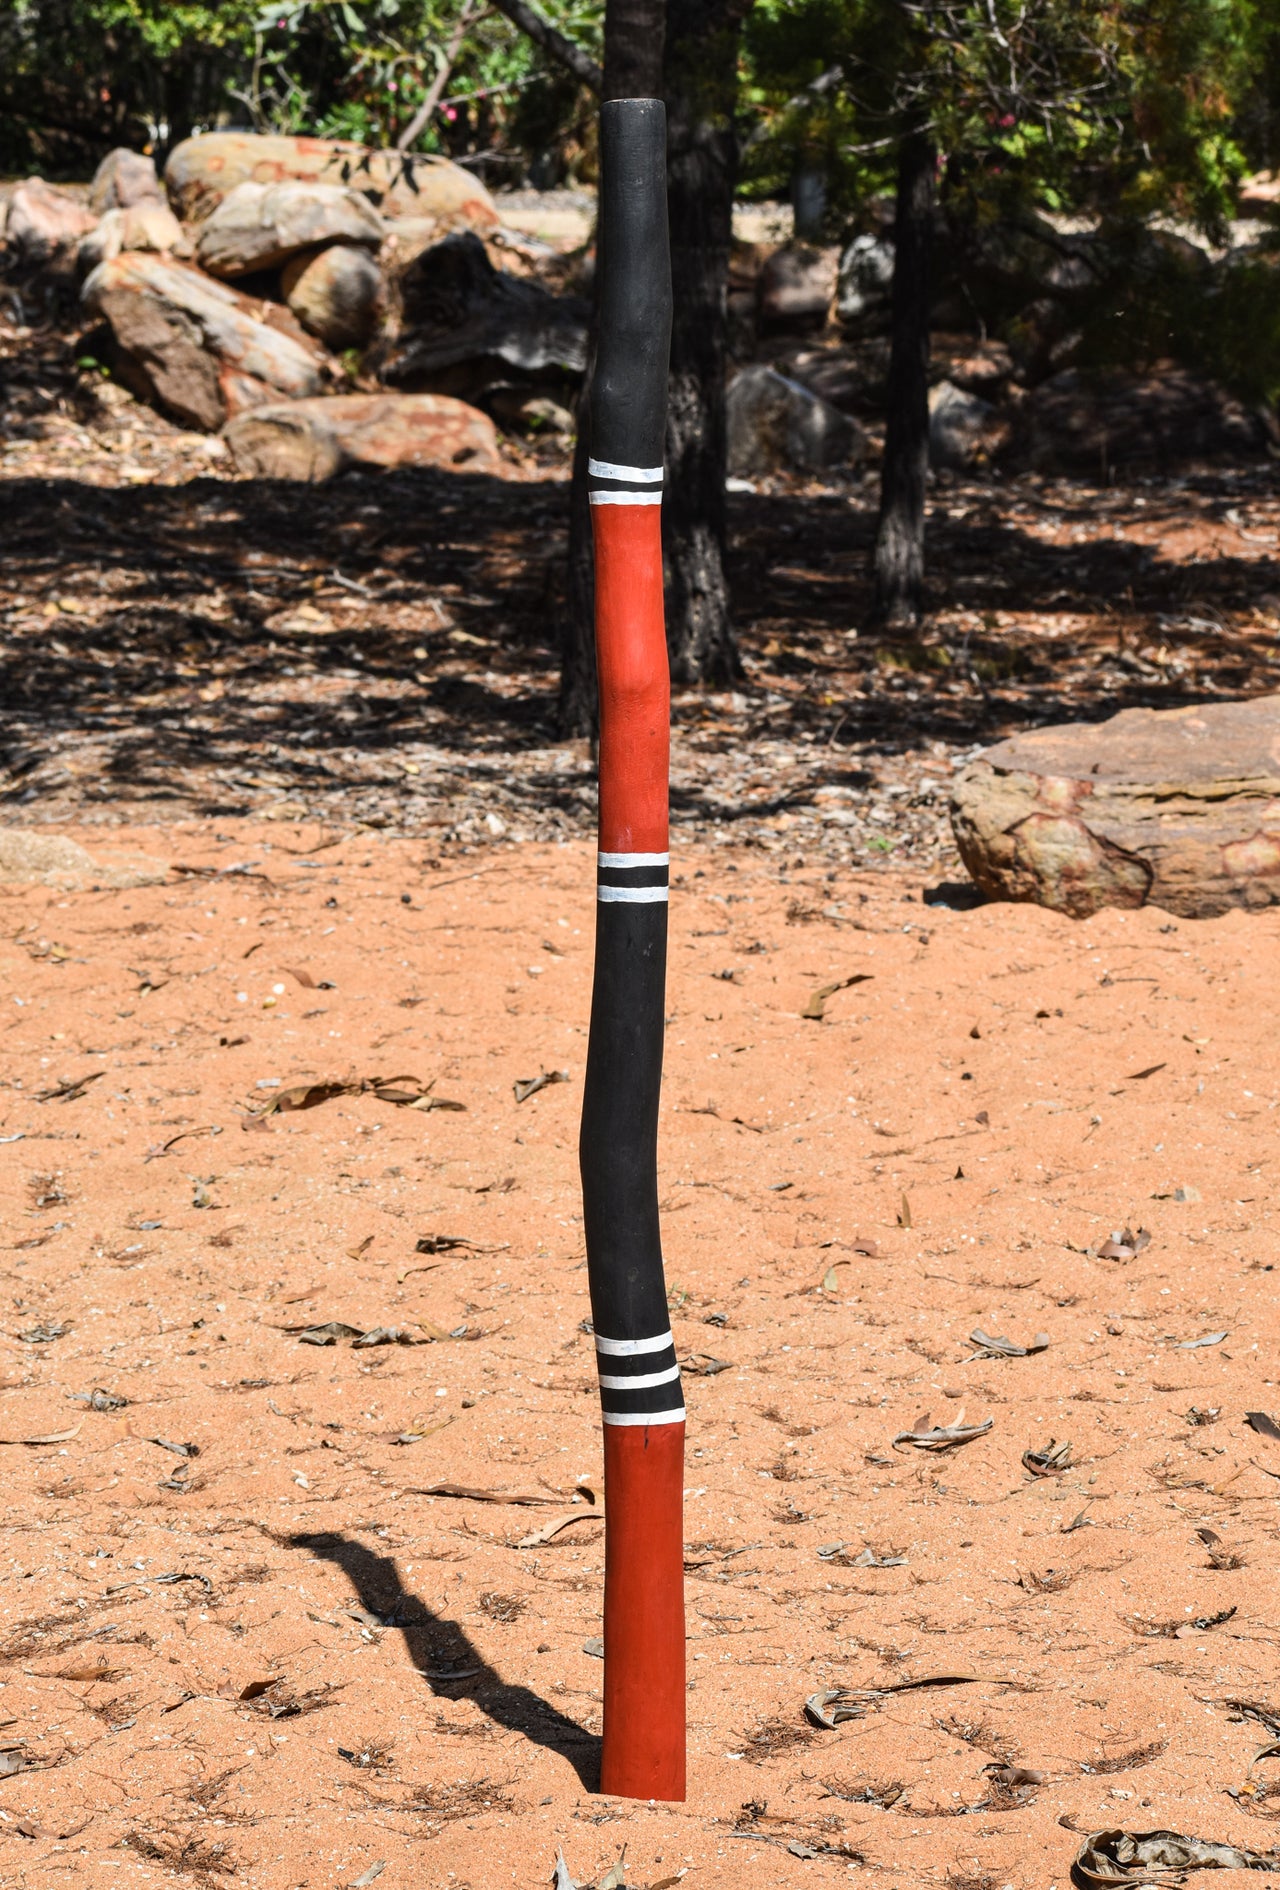 Yiraka (Digeridoo) by Dennis Maminyamanja